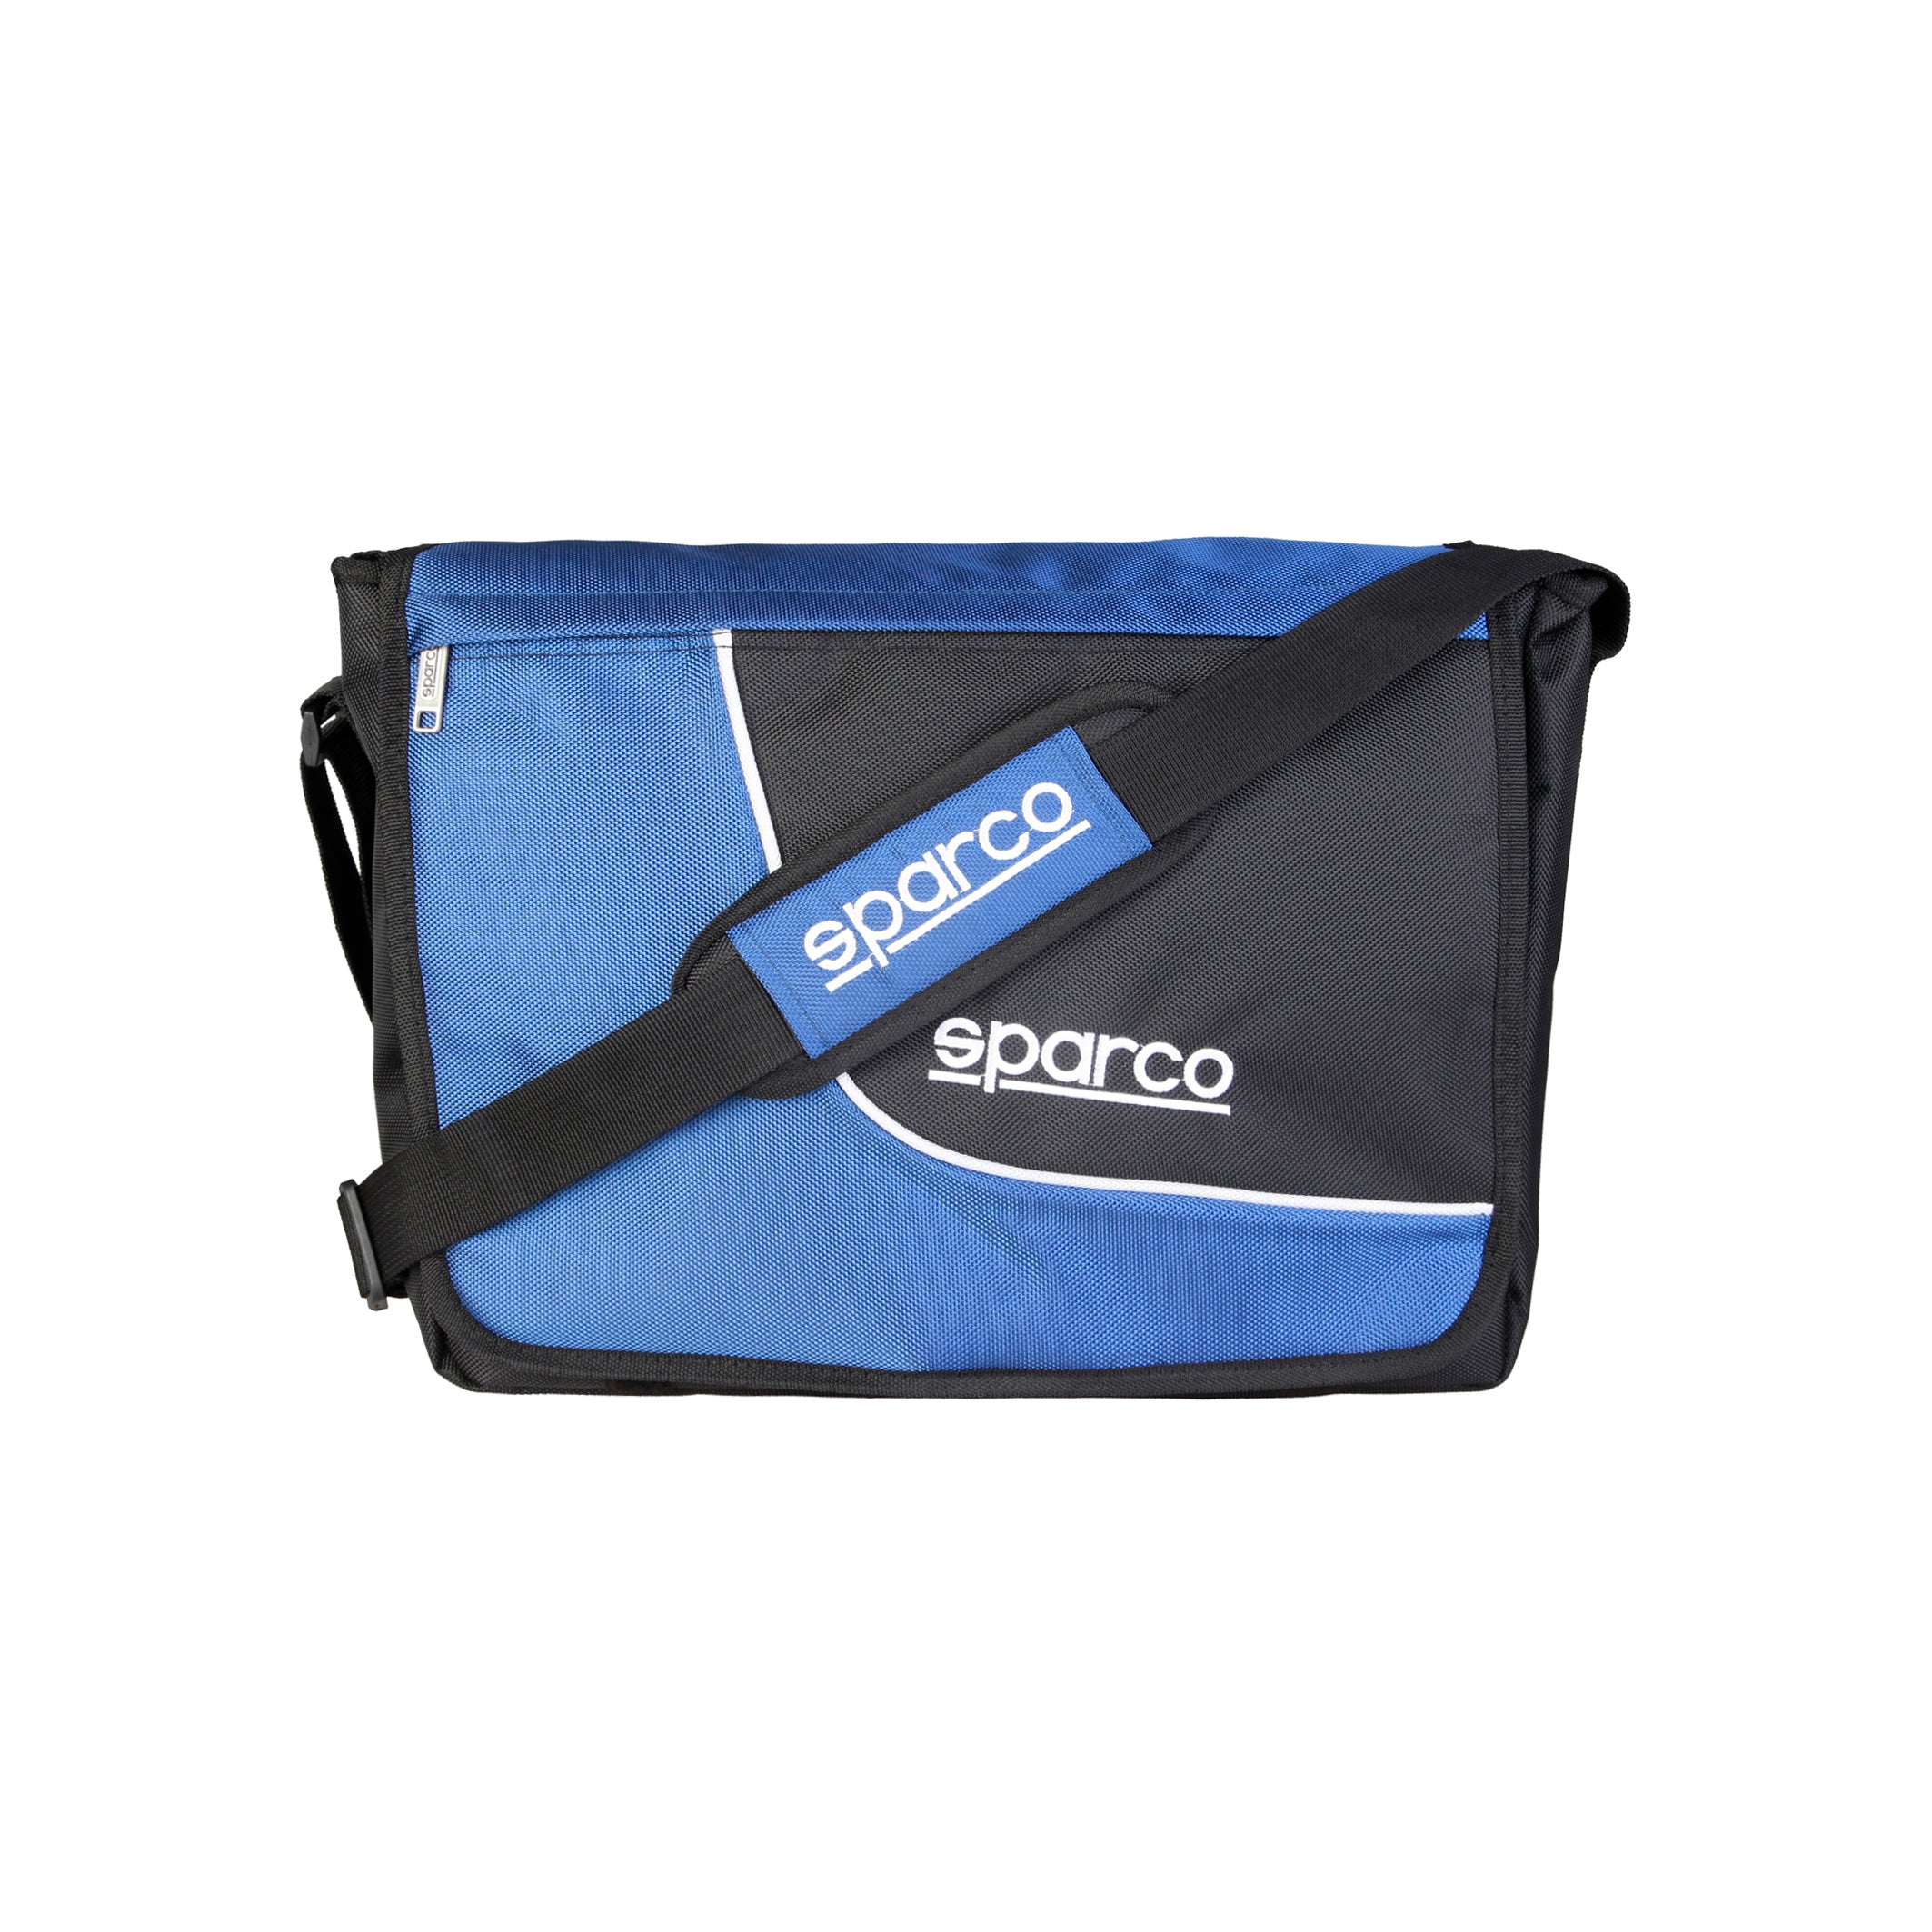 Sparco Blue Crossbody Messenger Style Laptop Bag - SL, Front, Blue